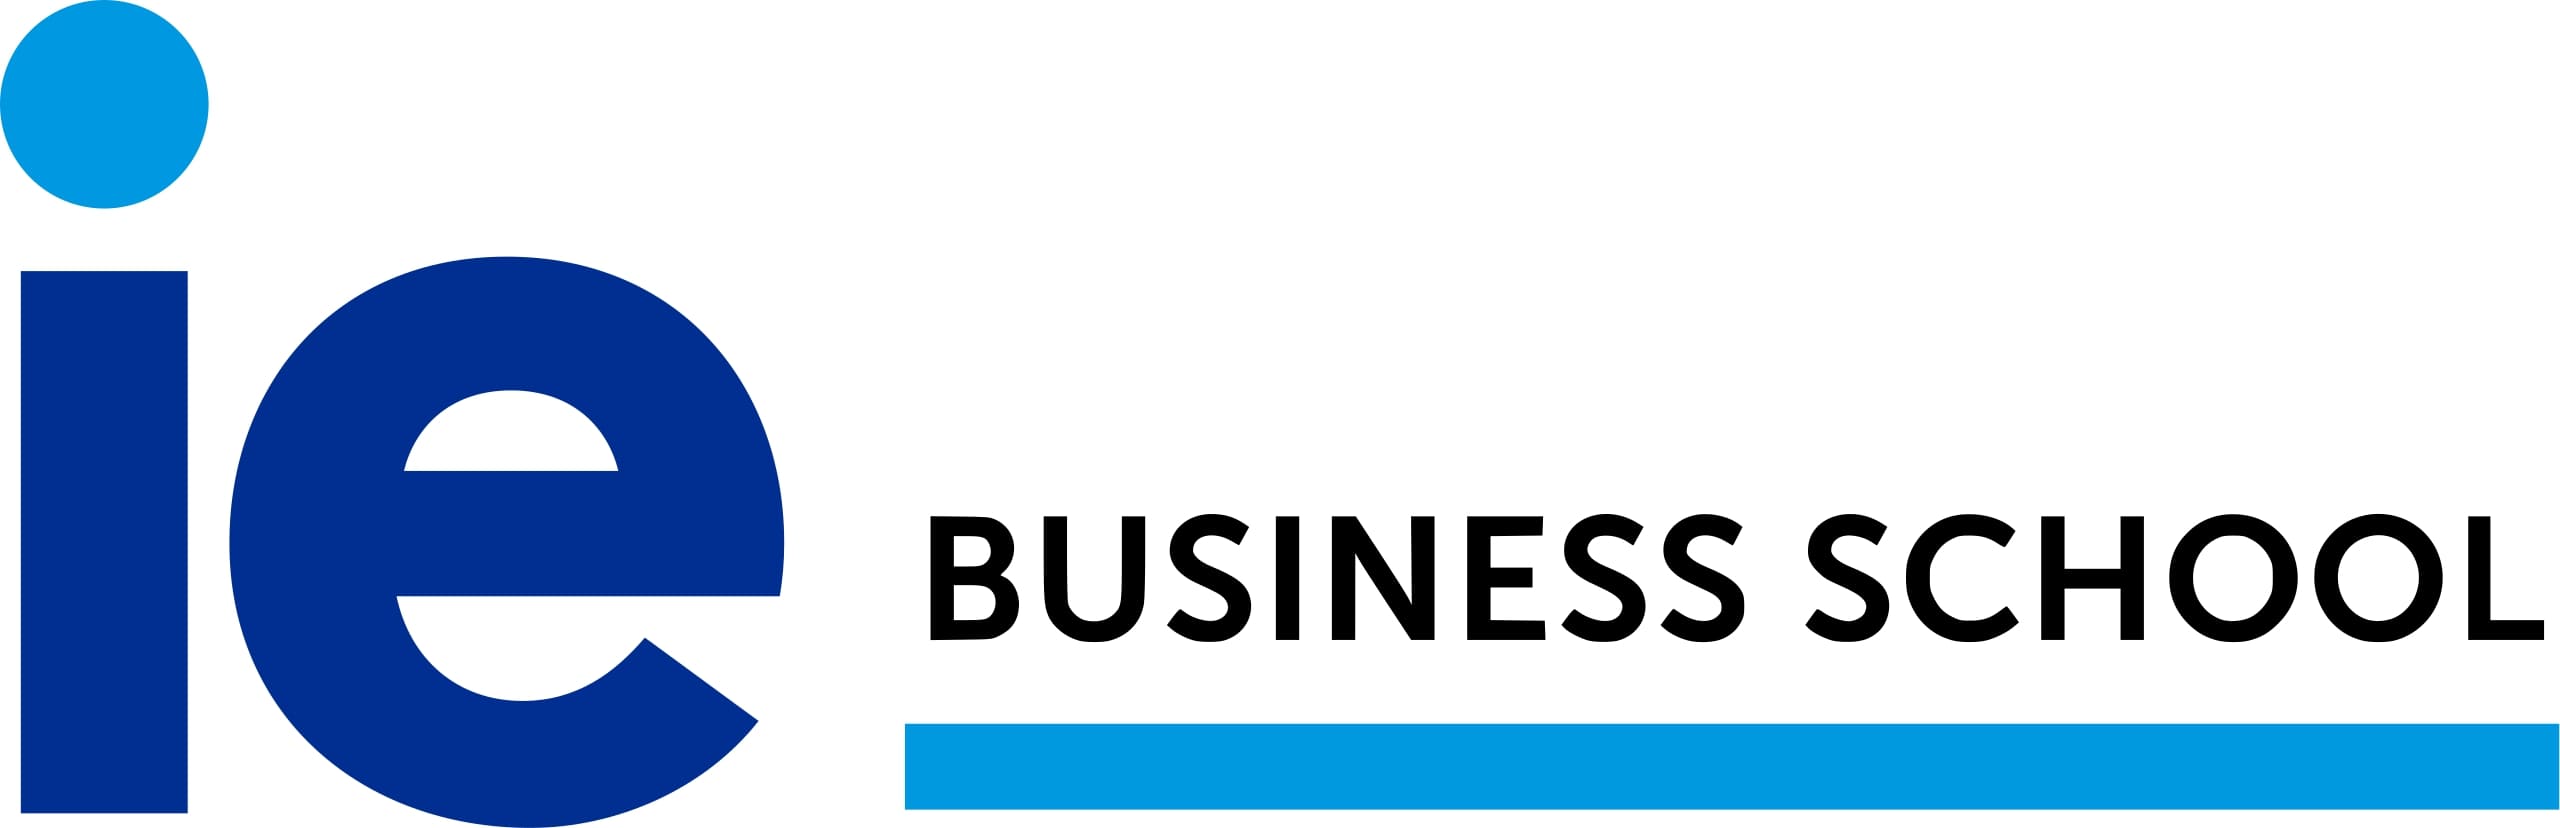 IE_Business_School_logo.svg.jpg